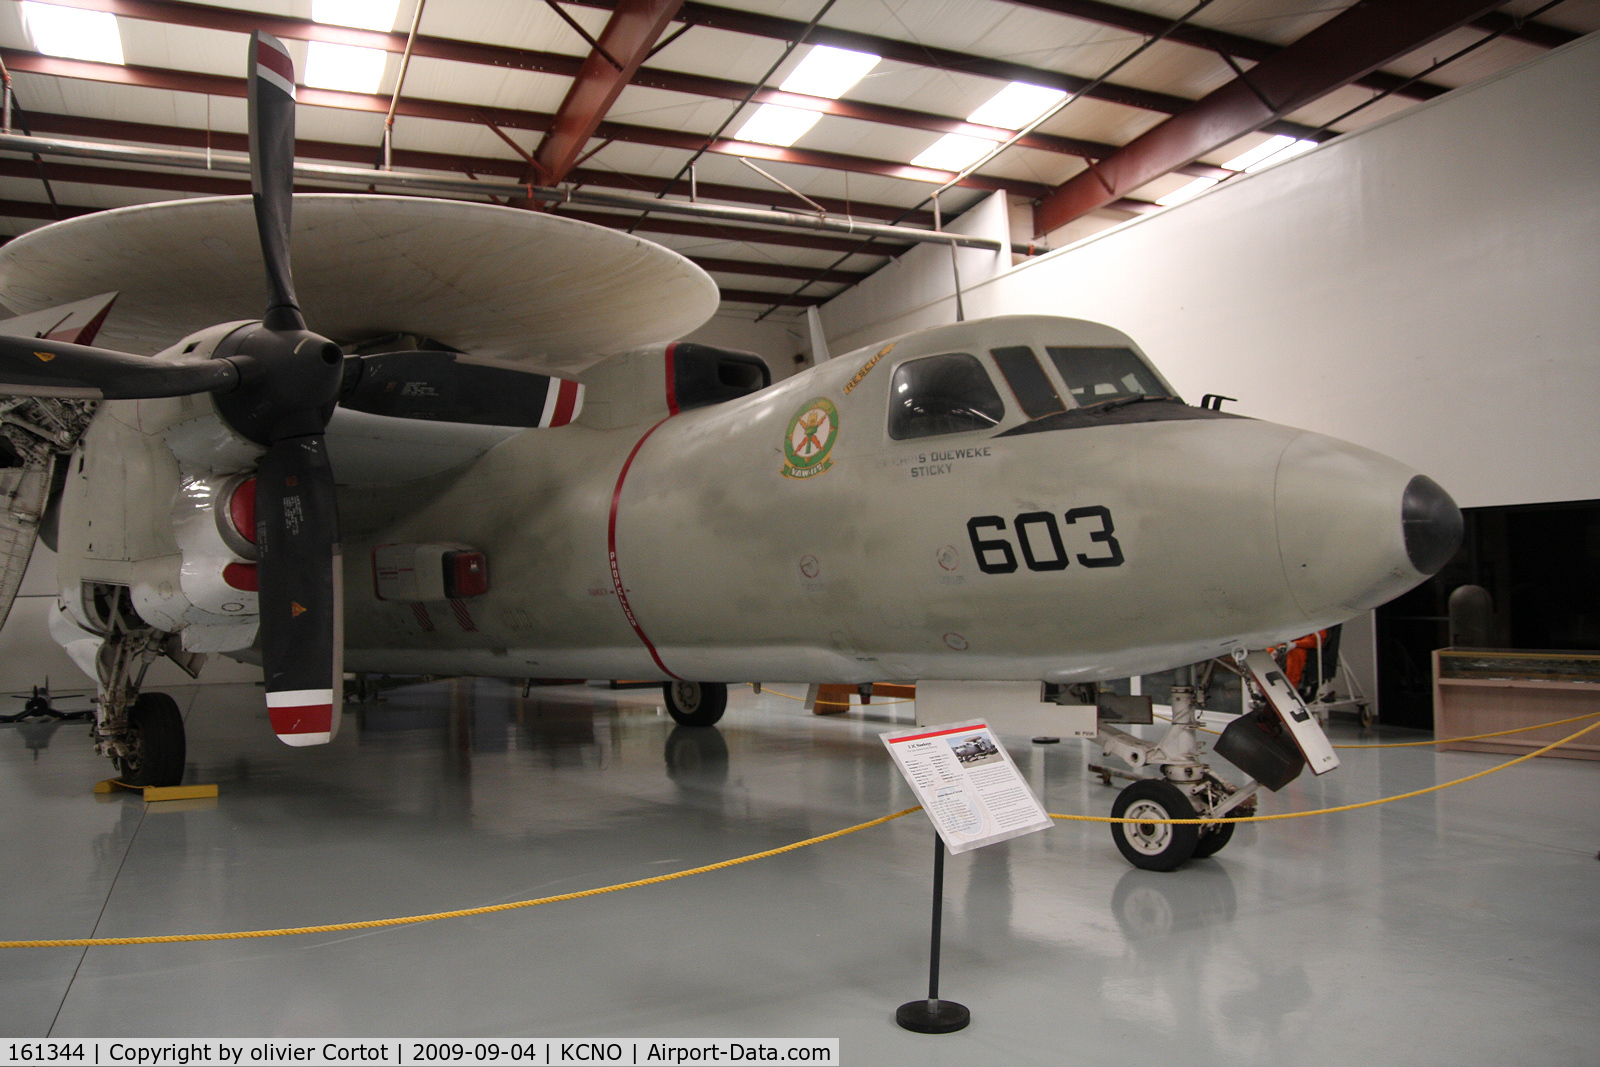 161344, Grumman E-2C Hawkeye C/N A075, Yanks museum, chino